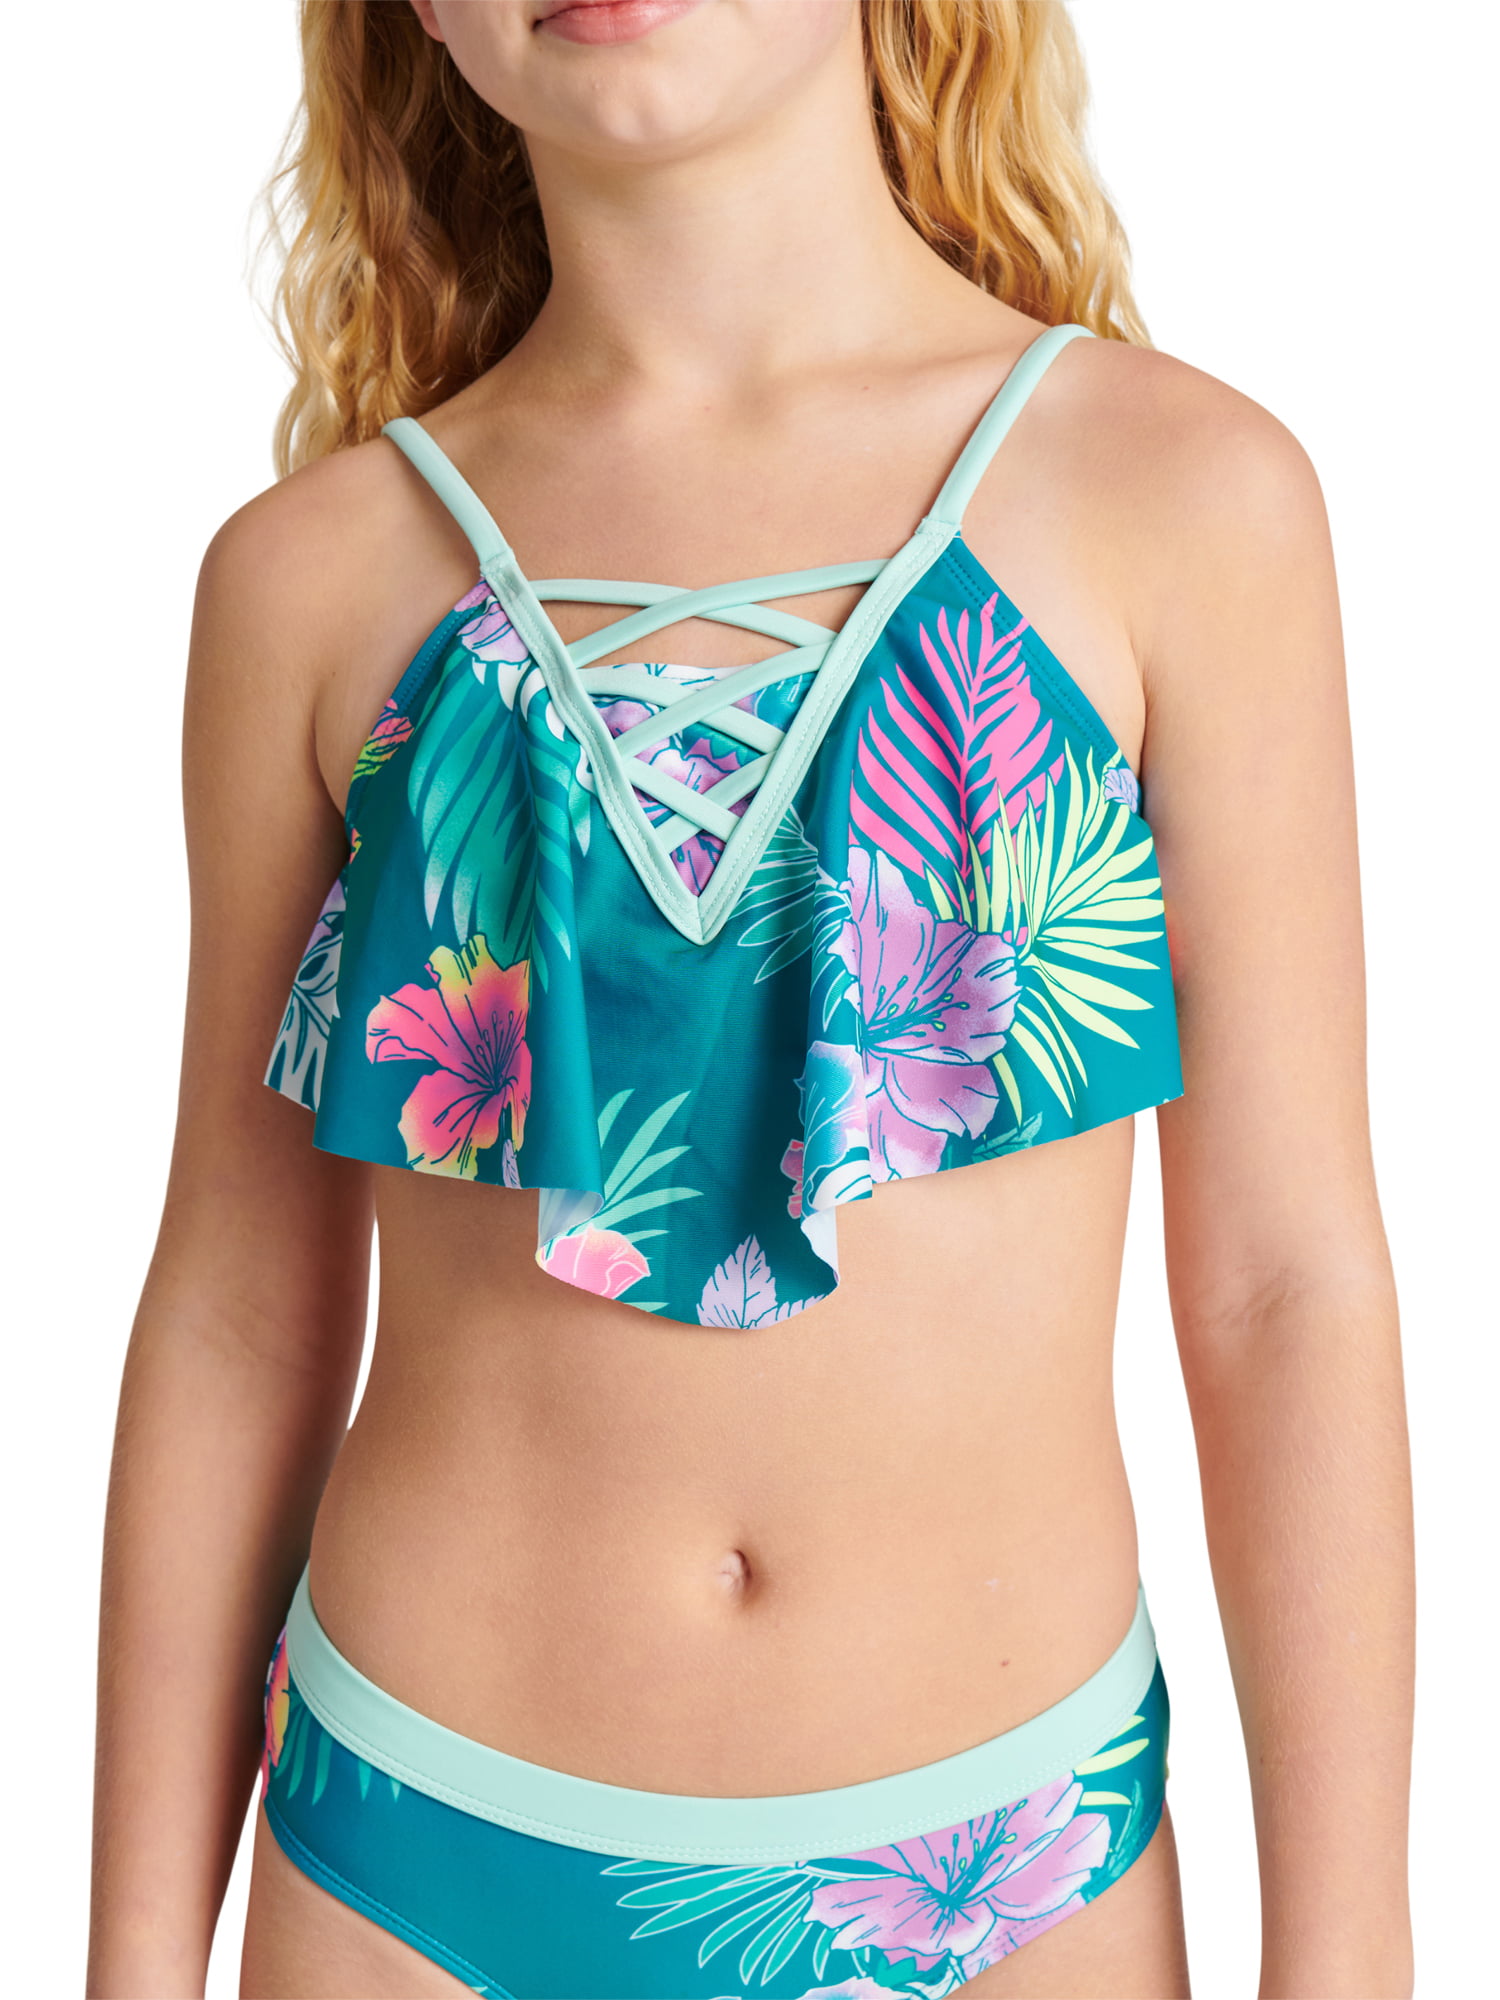 New Justice Swimsuit Flounce Bikini Cactus Pink Girls Swim Wear Suit Sz 20 NWT 